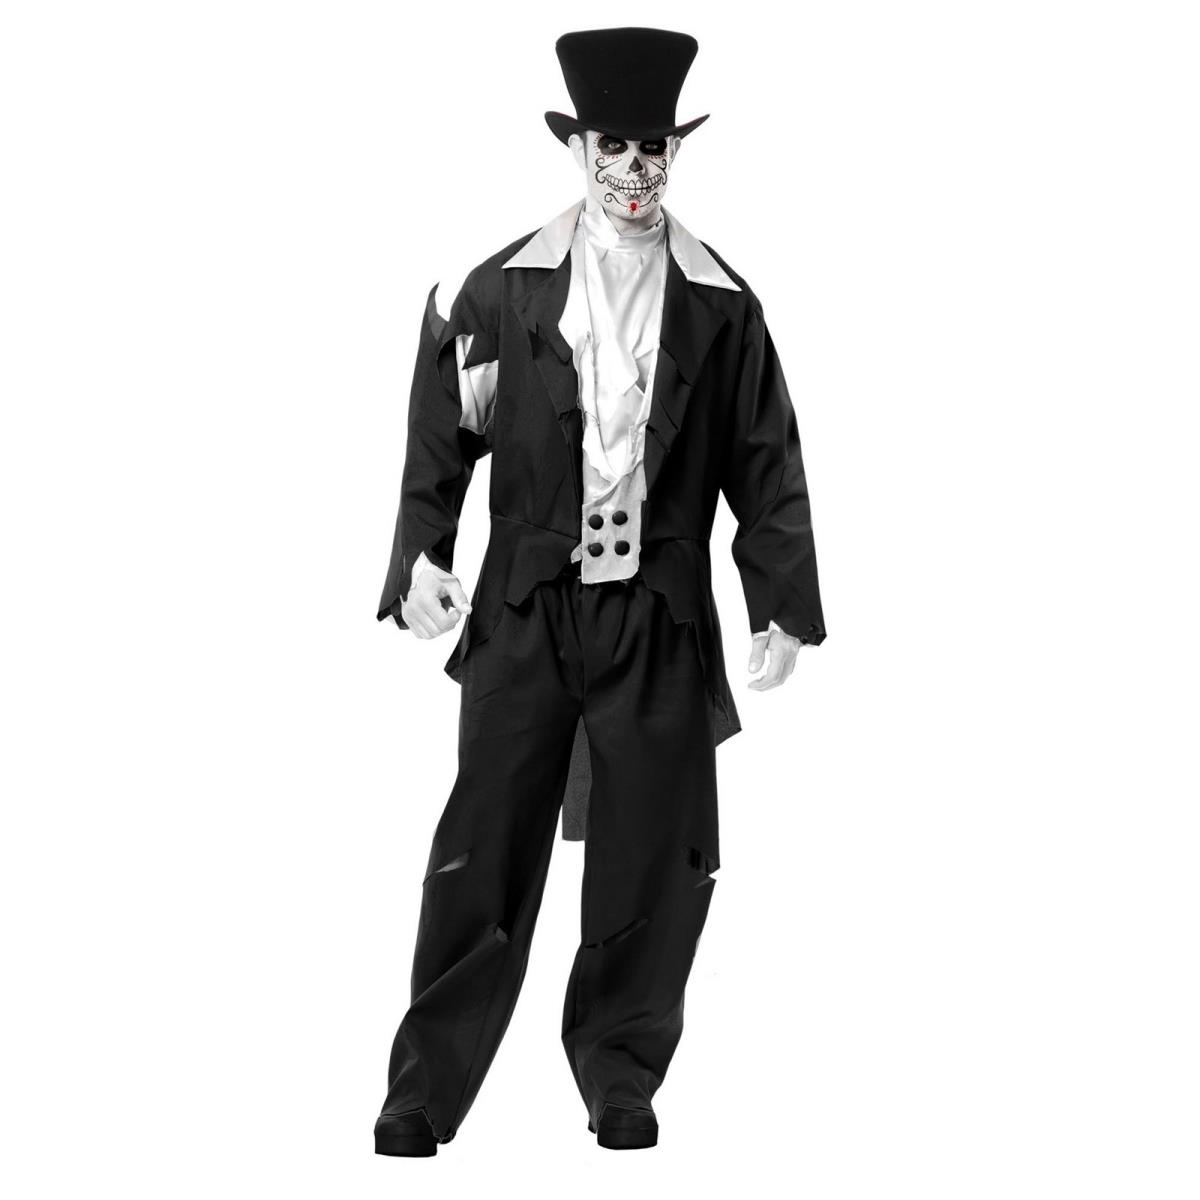 408987 Mens Ghost Groom Adult Costume, Small